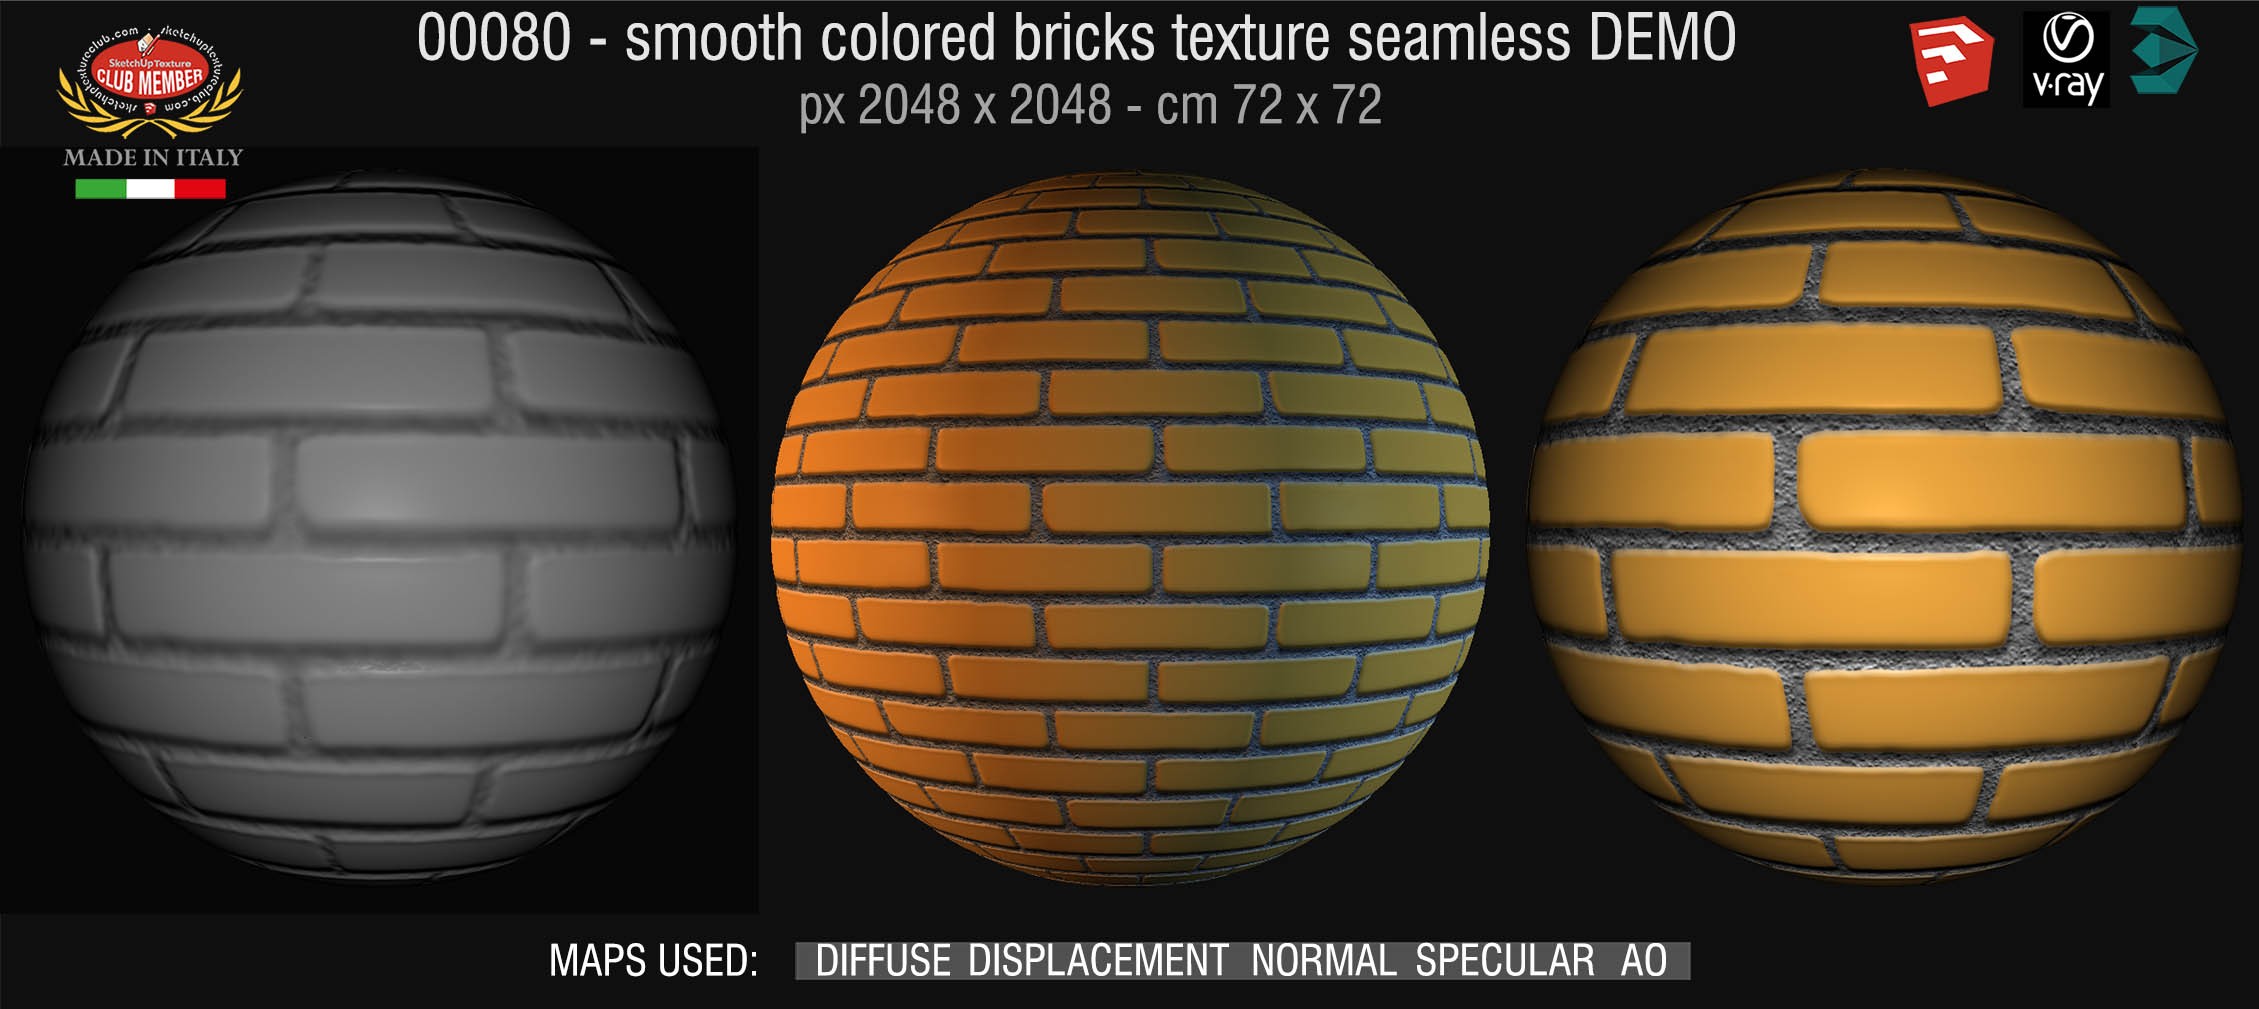 00080 smooth colored bricks texture seamless + maps DEMO